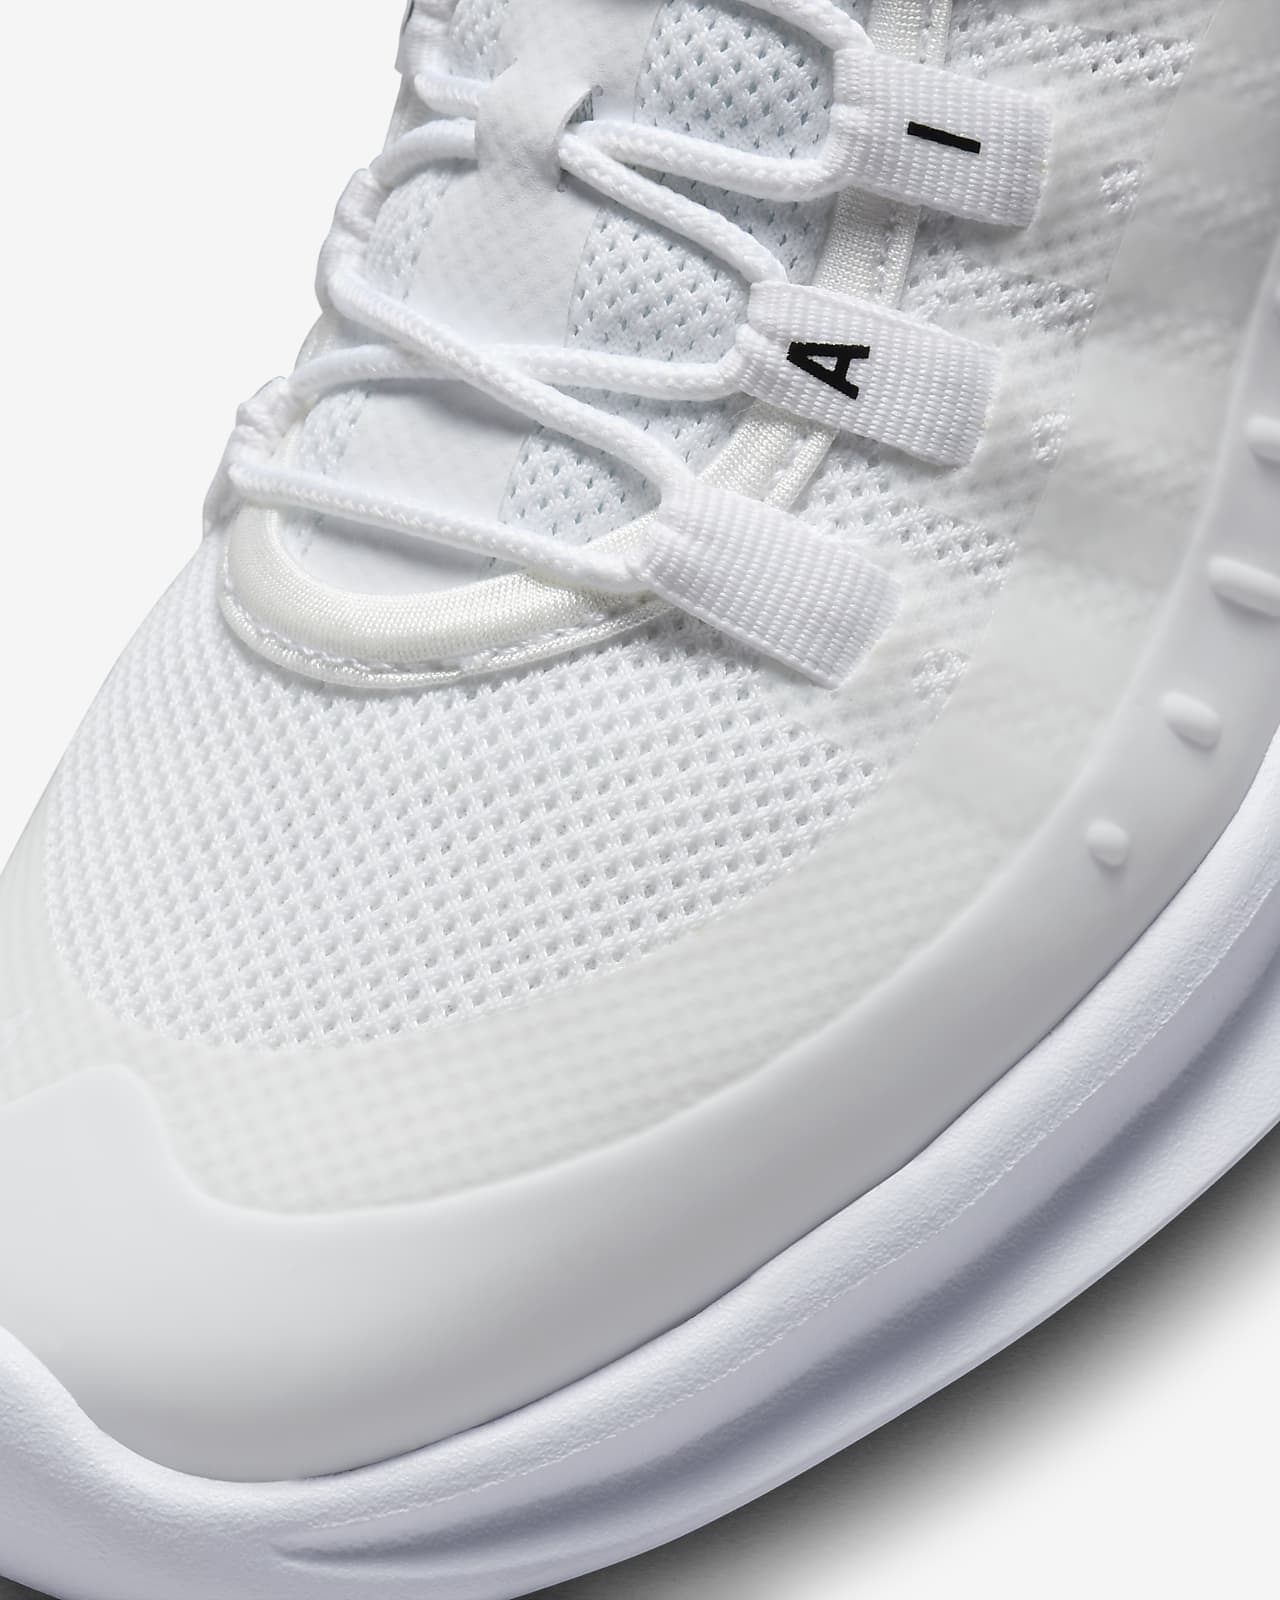 Nike Air Max Women's Shoes.